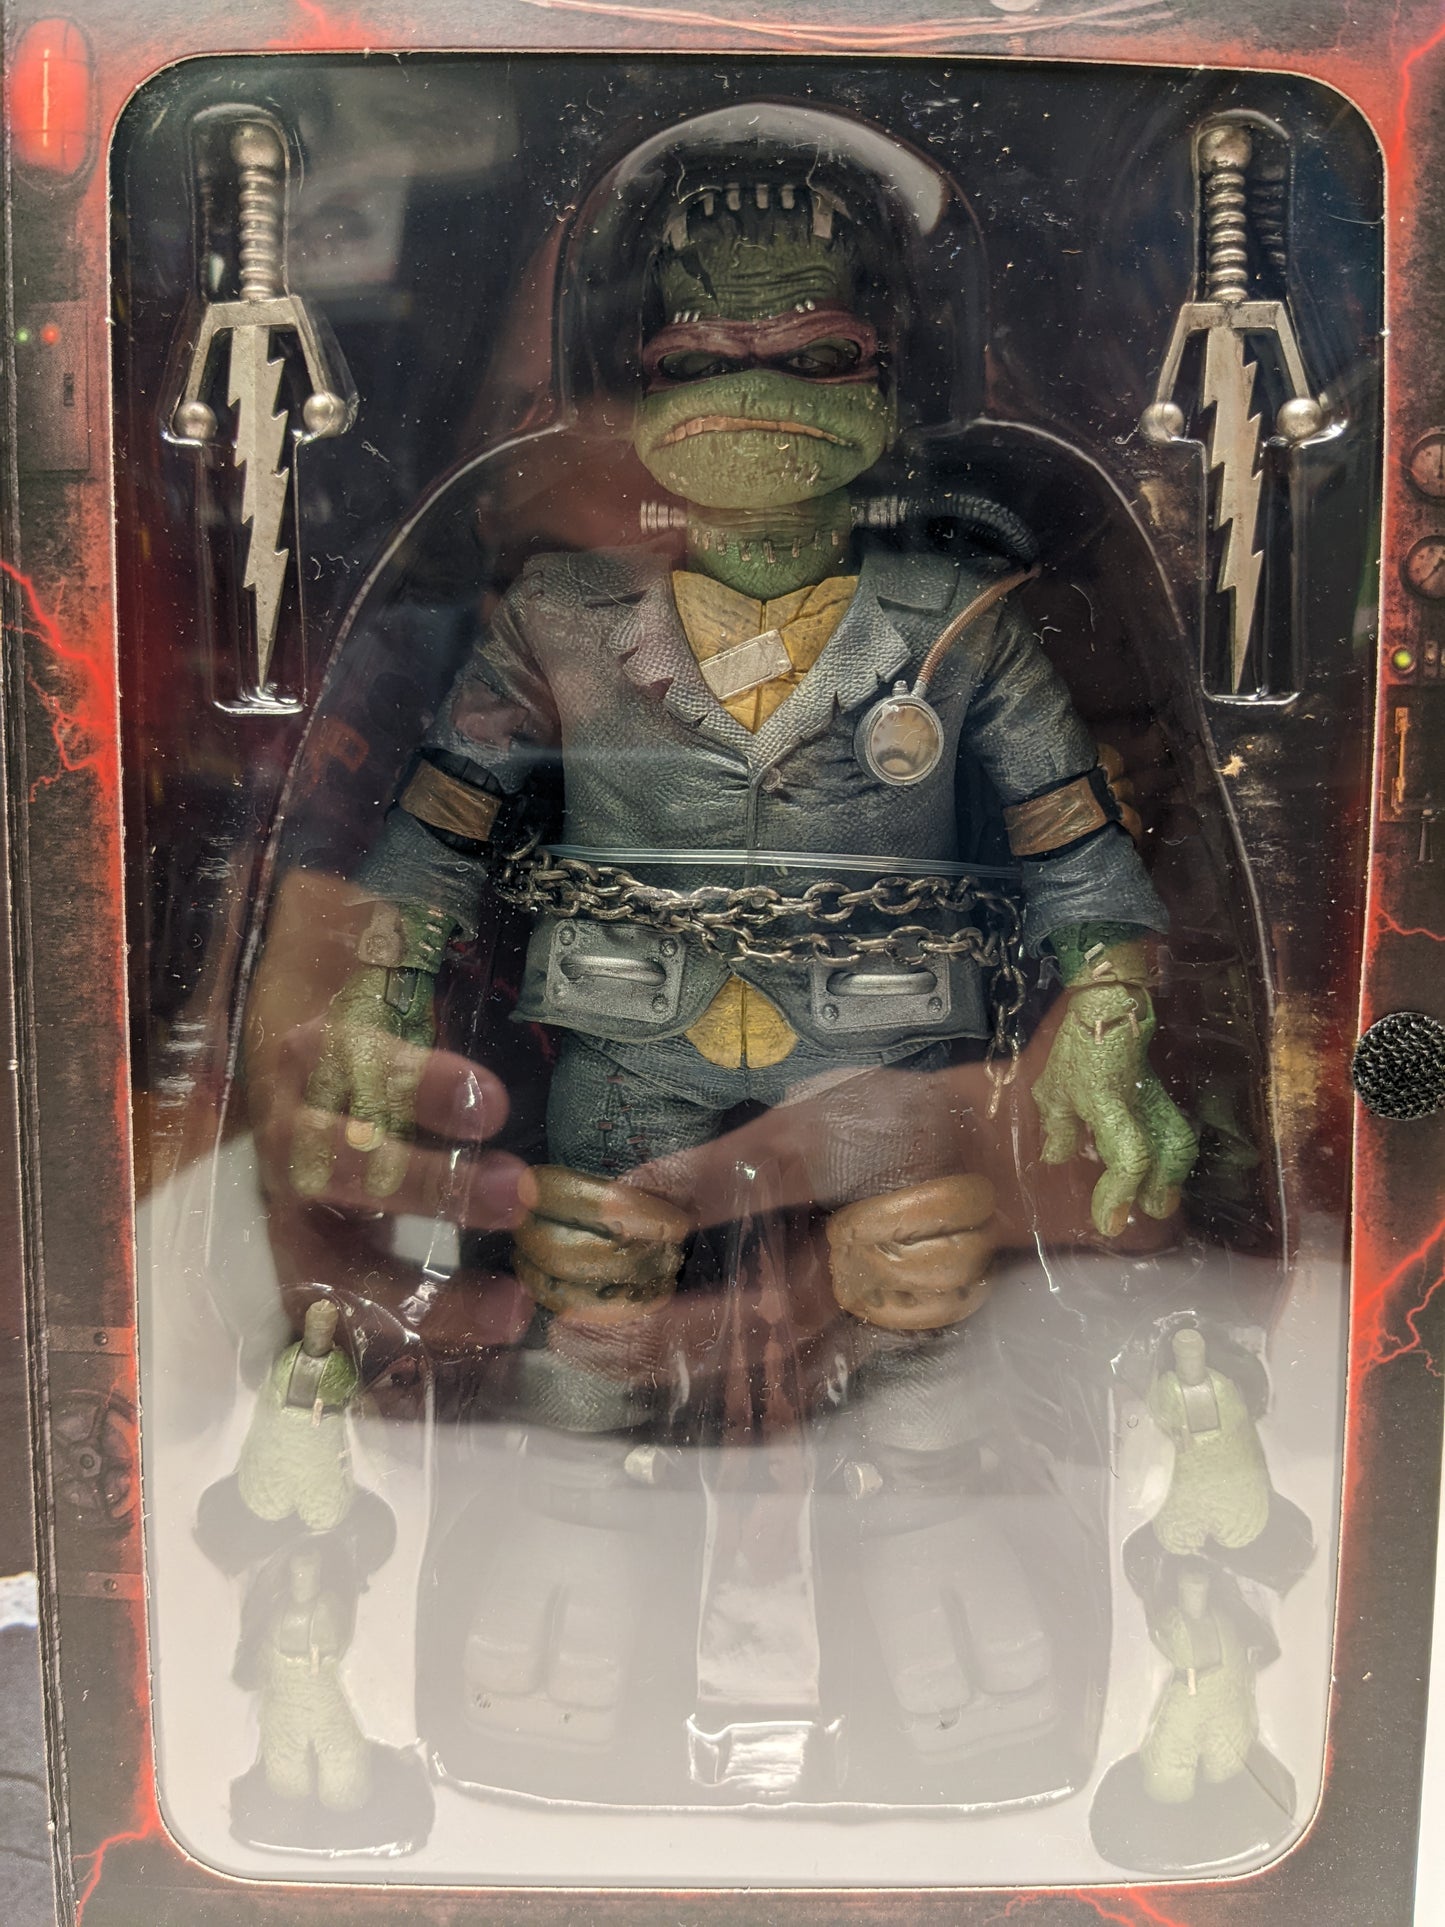 NECA - Universal Monsters x - Teenage Mutant Ninja Turtles - Ultimate Raphael as Frankenstein's Monster 7-Inch Scale Action Figure